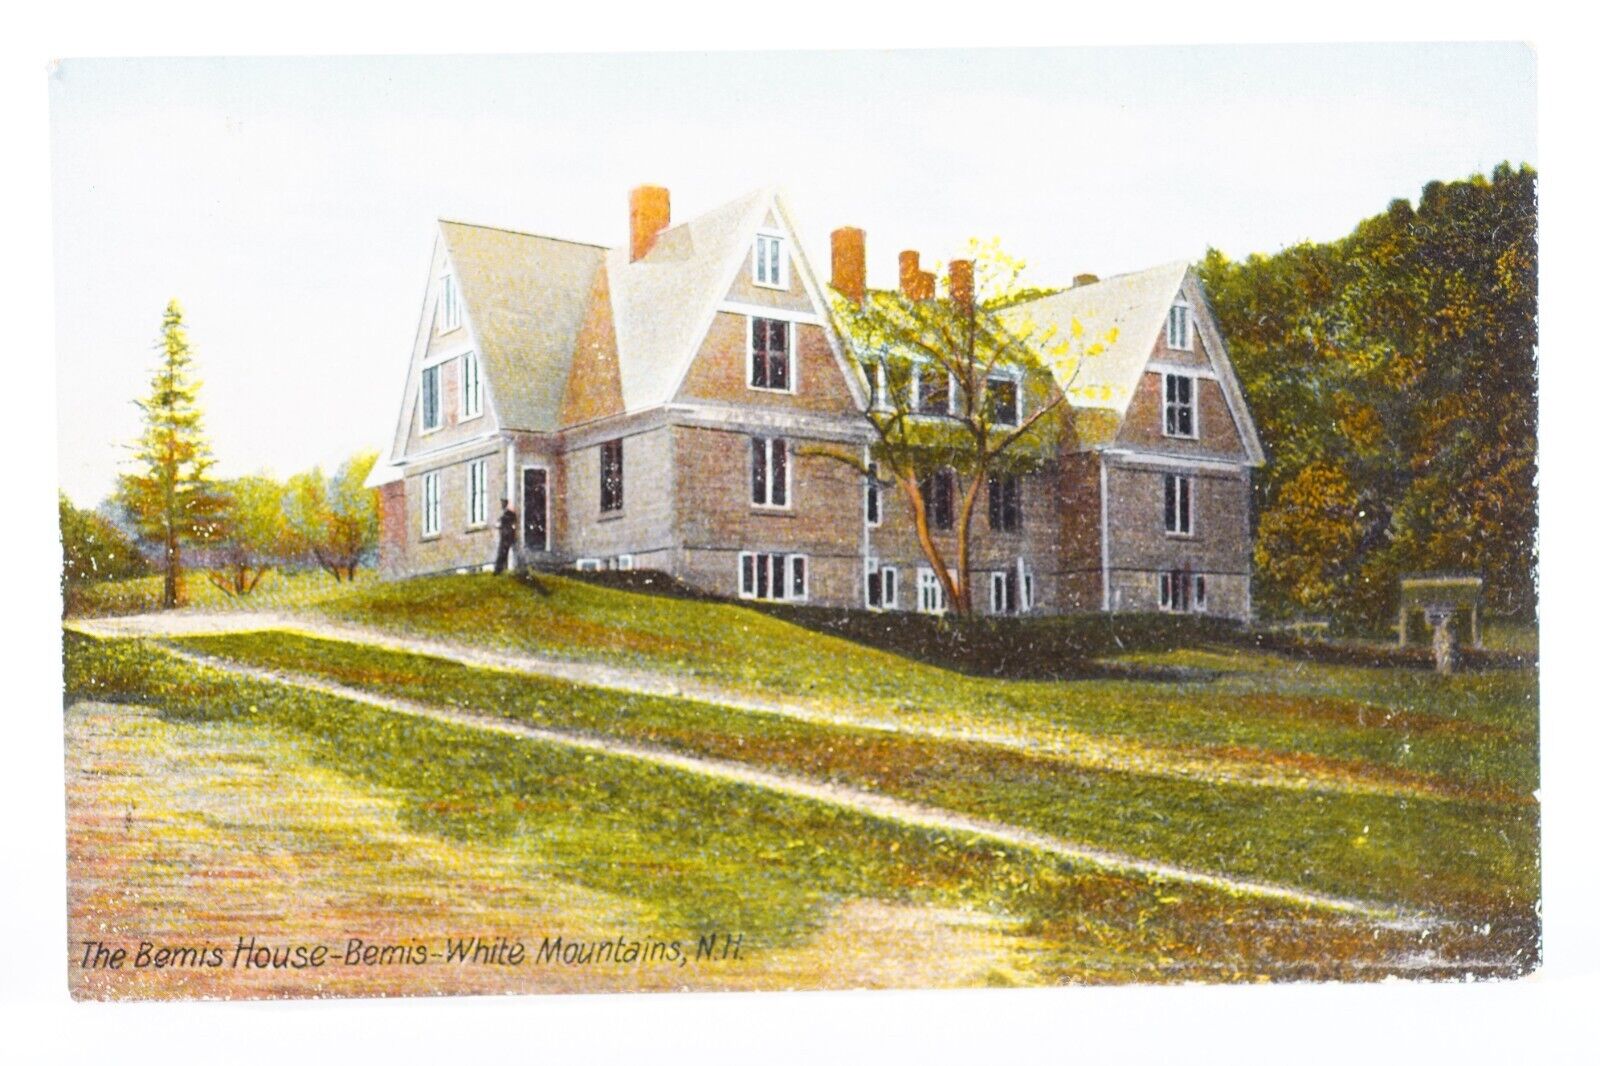 The Bemis House Bemis-White Mountains New Hampshire Postcard